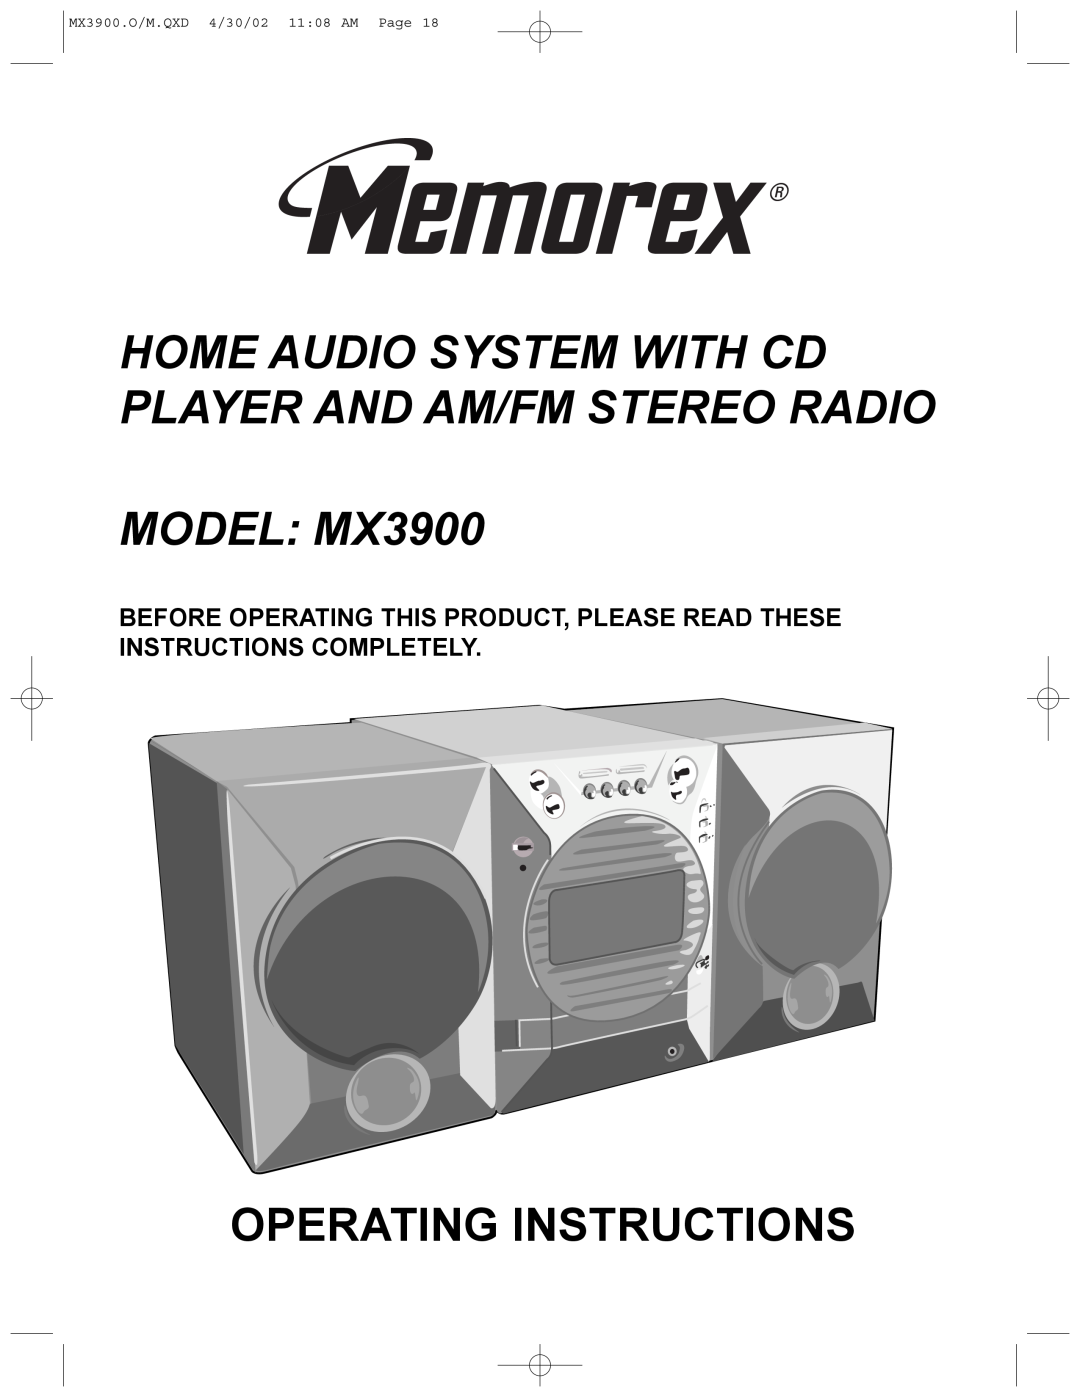 Memorex operating instructions MODEL MX3900, Operating Instructions, MX3900.O/M.QXD 4/30/02 11 08 AM Page 